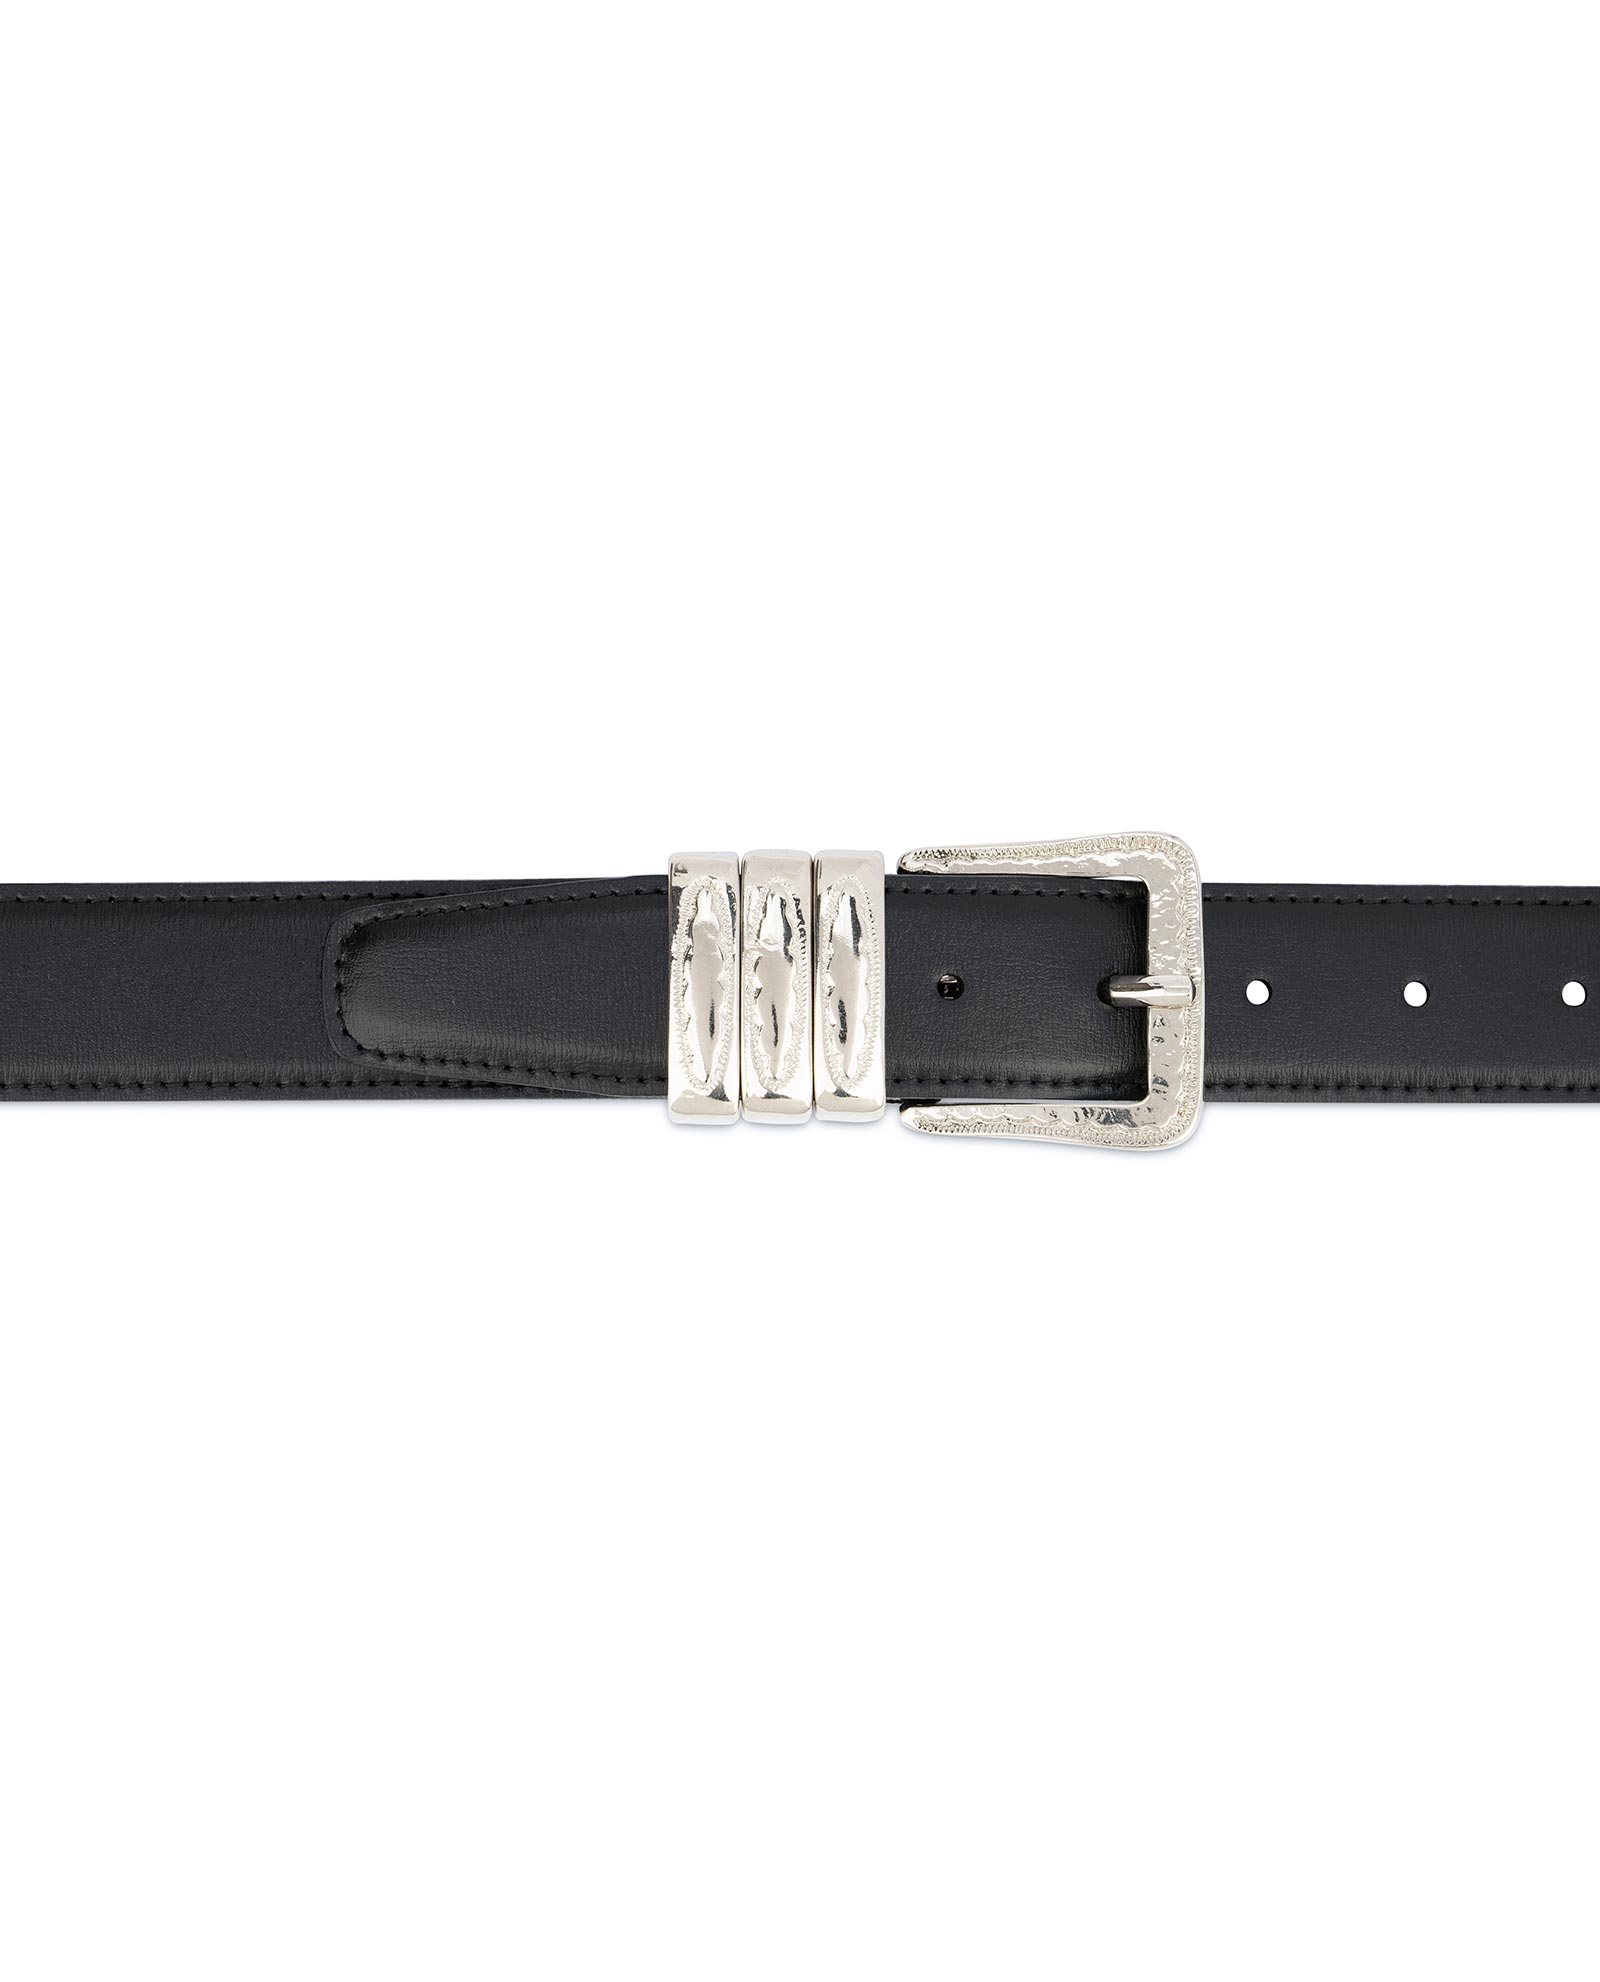 Buy Leather Belt with Metal Loops | Black Leather | LeatherBeltsOnline